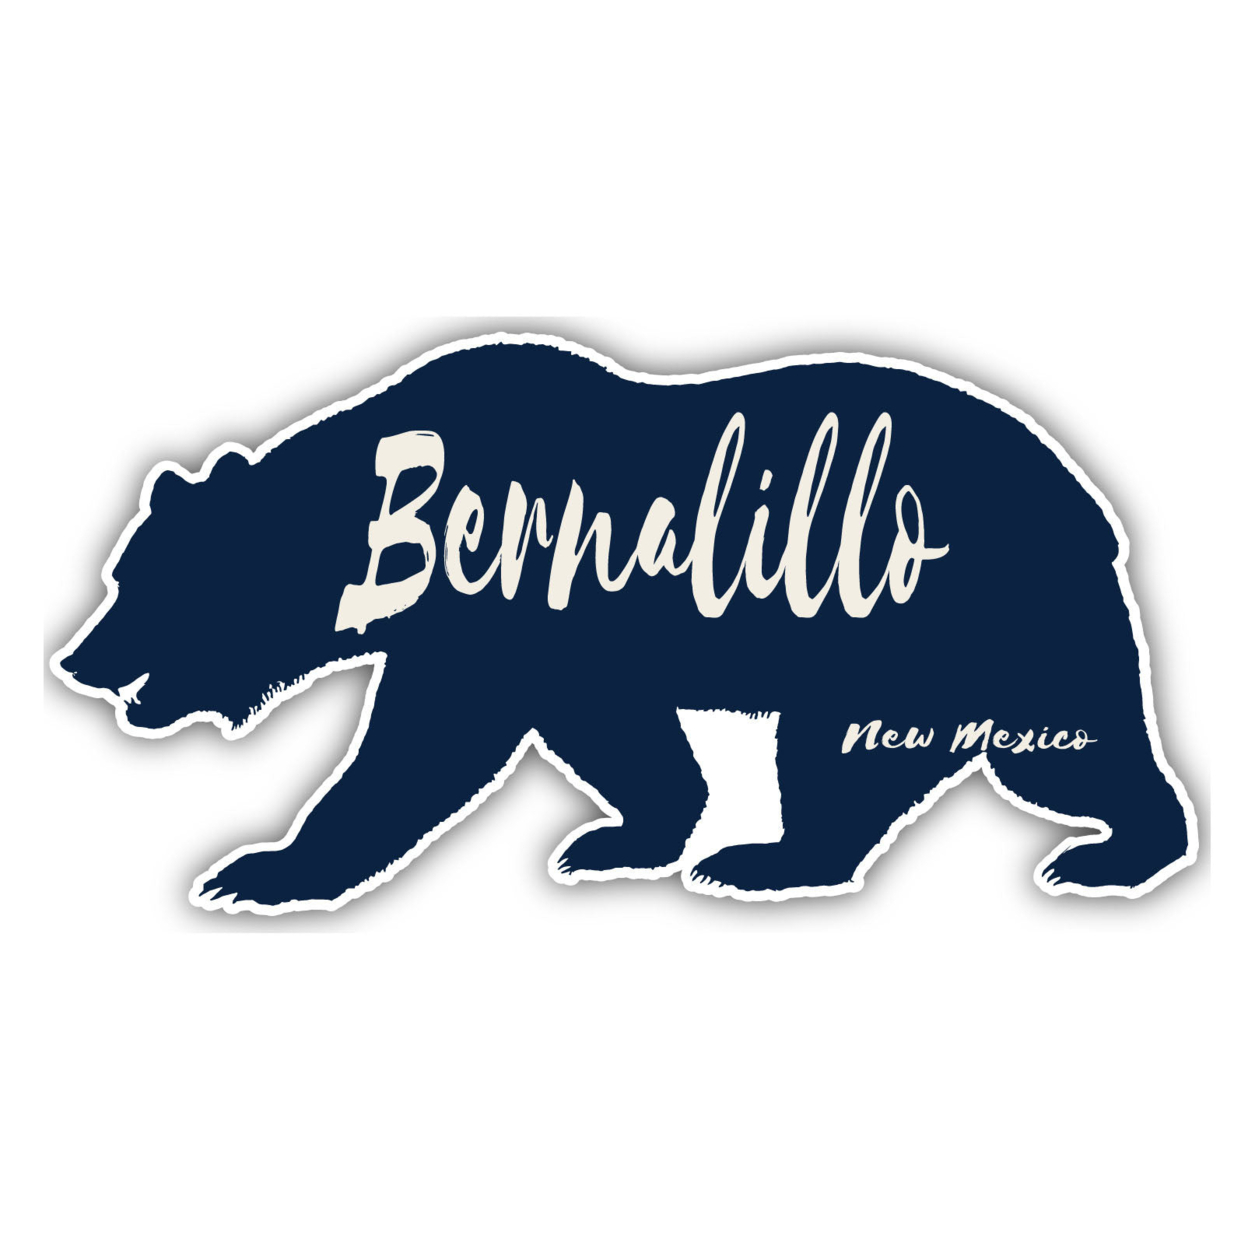 Bernalillo New Mexico Souvenir Decorative Stickers (Choose Theme And Size) - Single Unit, 6-Inch, Camp Life